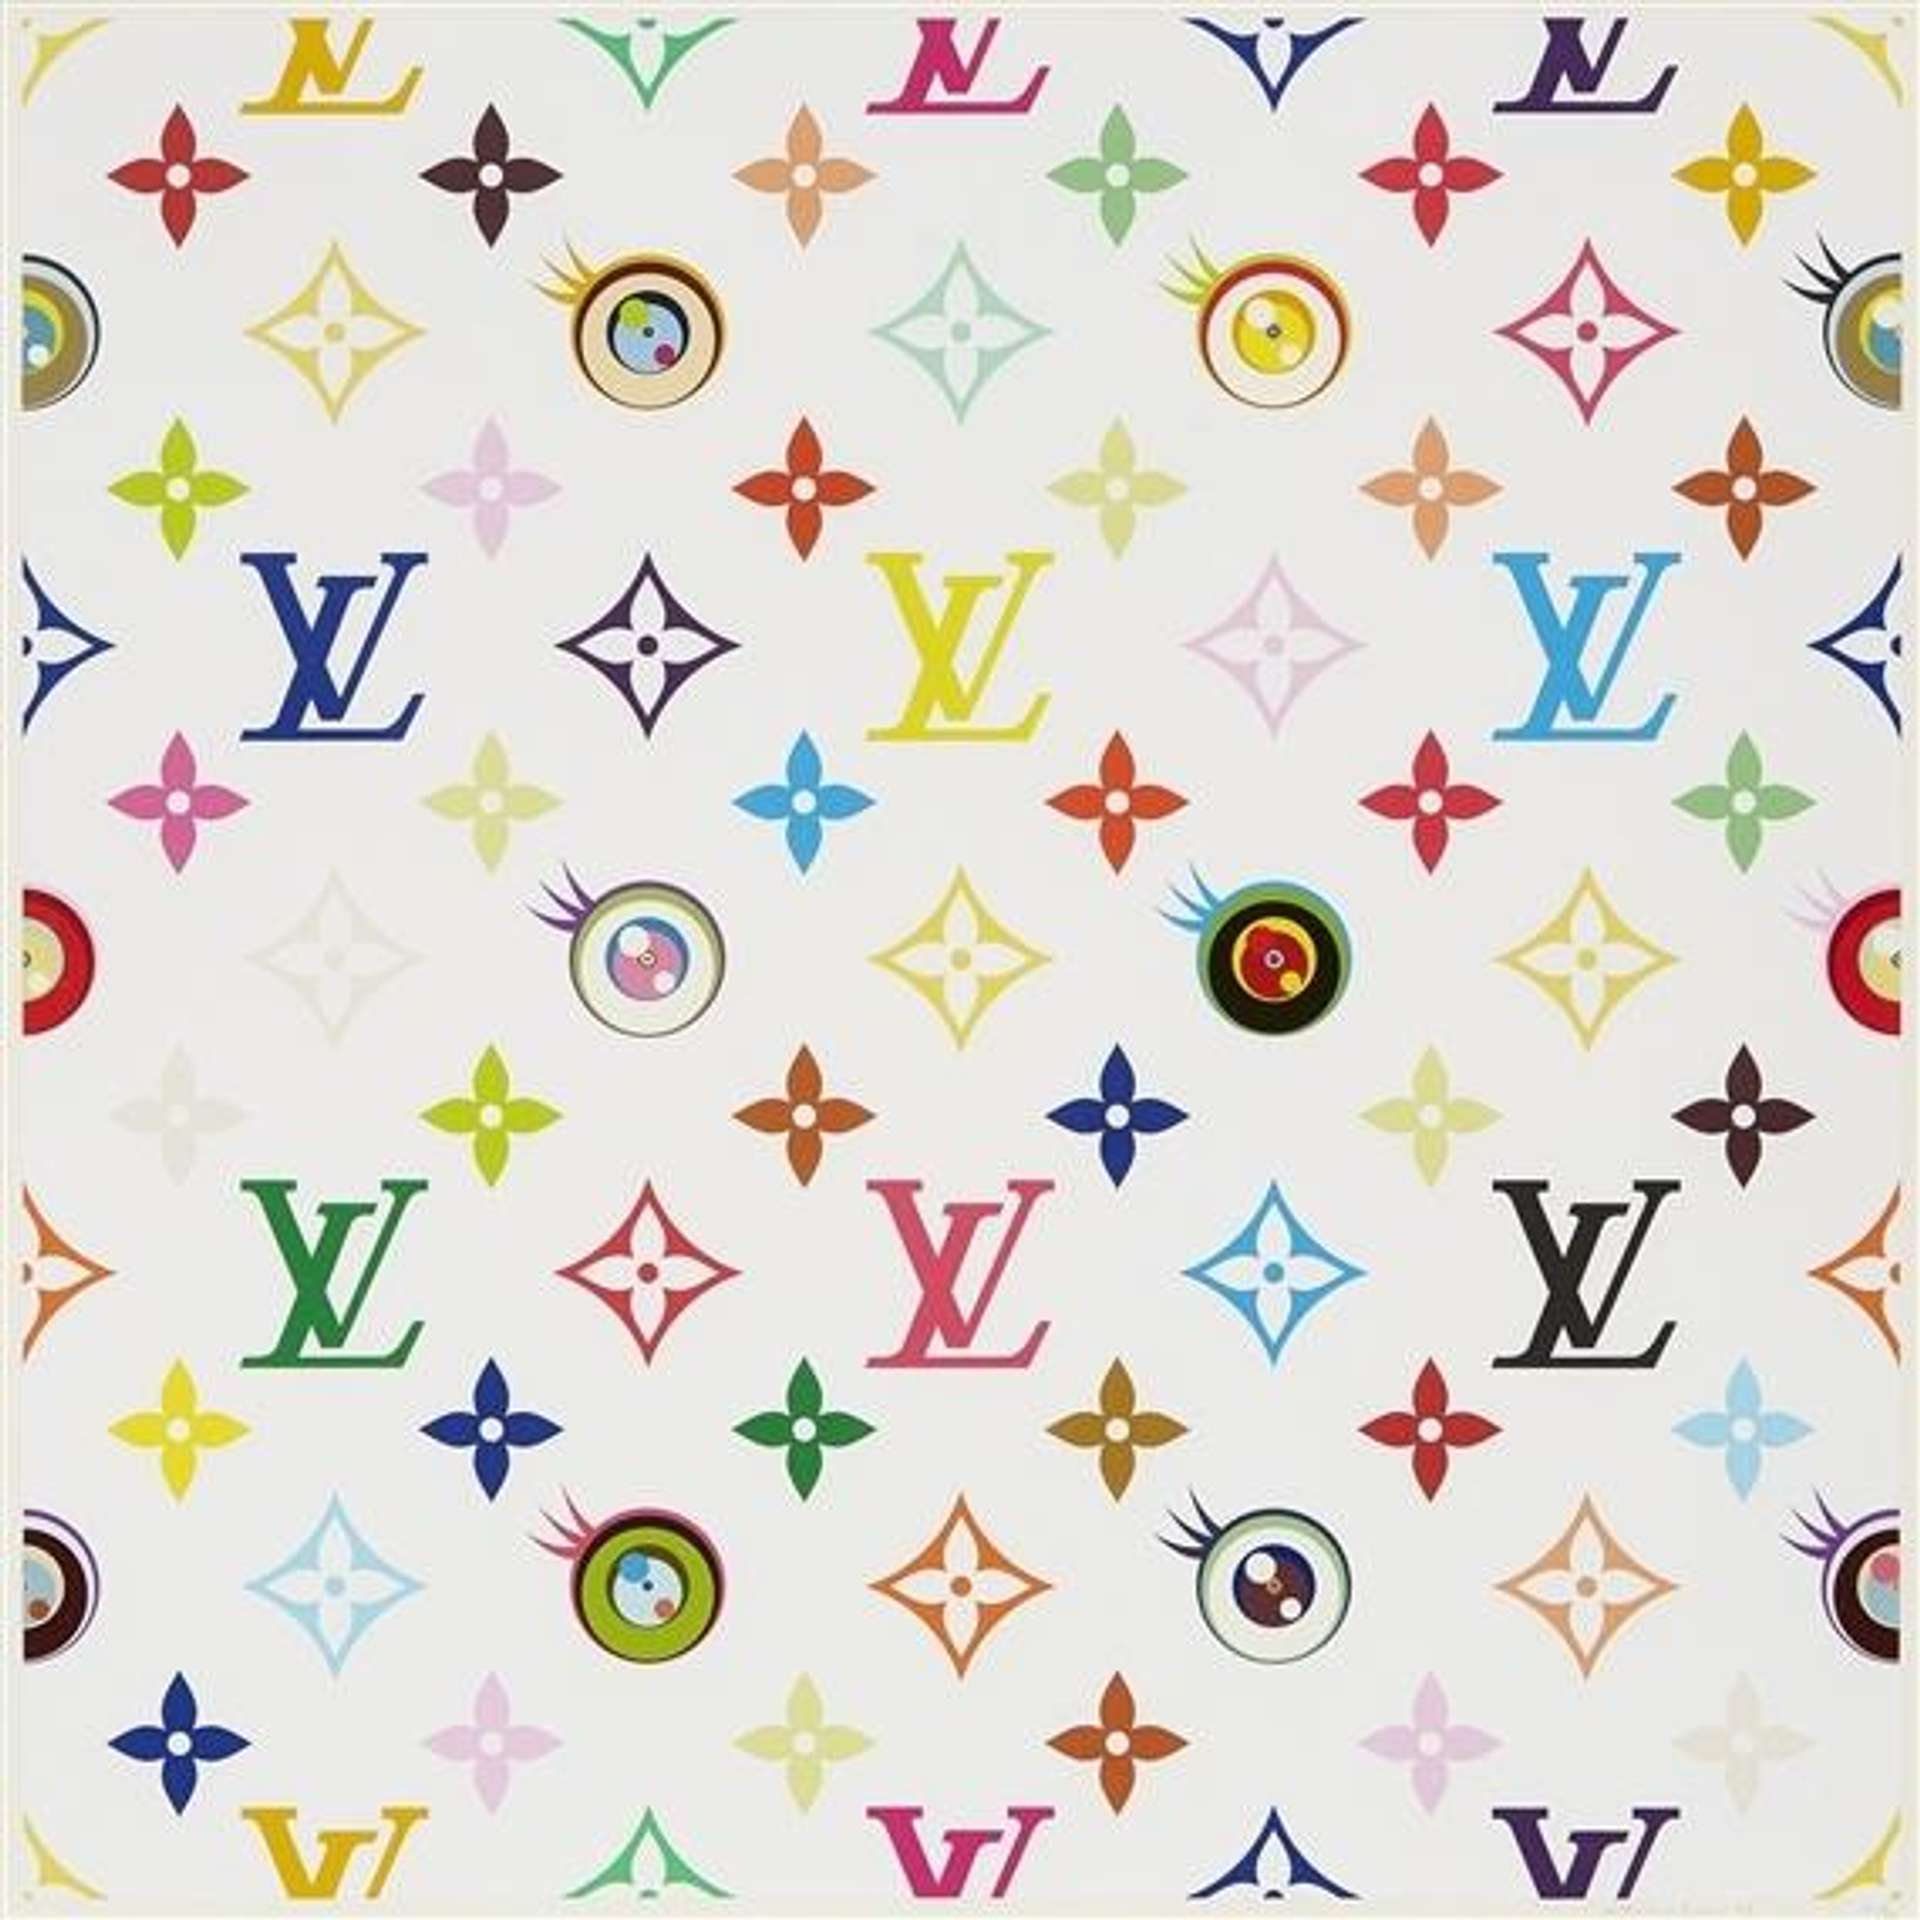 Takashi Murakami Louis Vuitton Eye Love Superflat (Signed Print) 2003